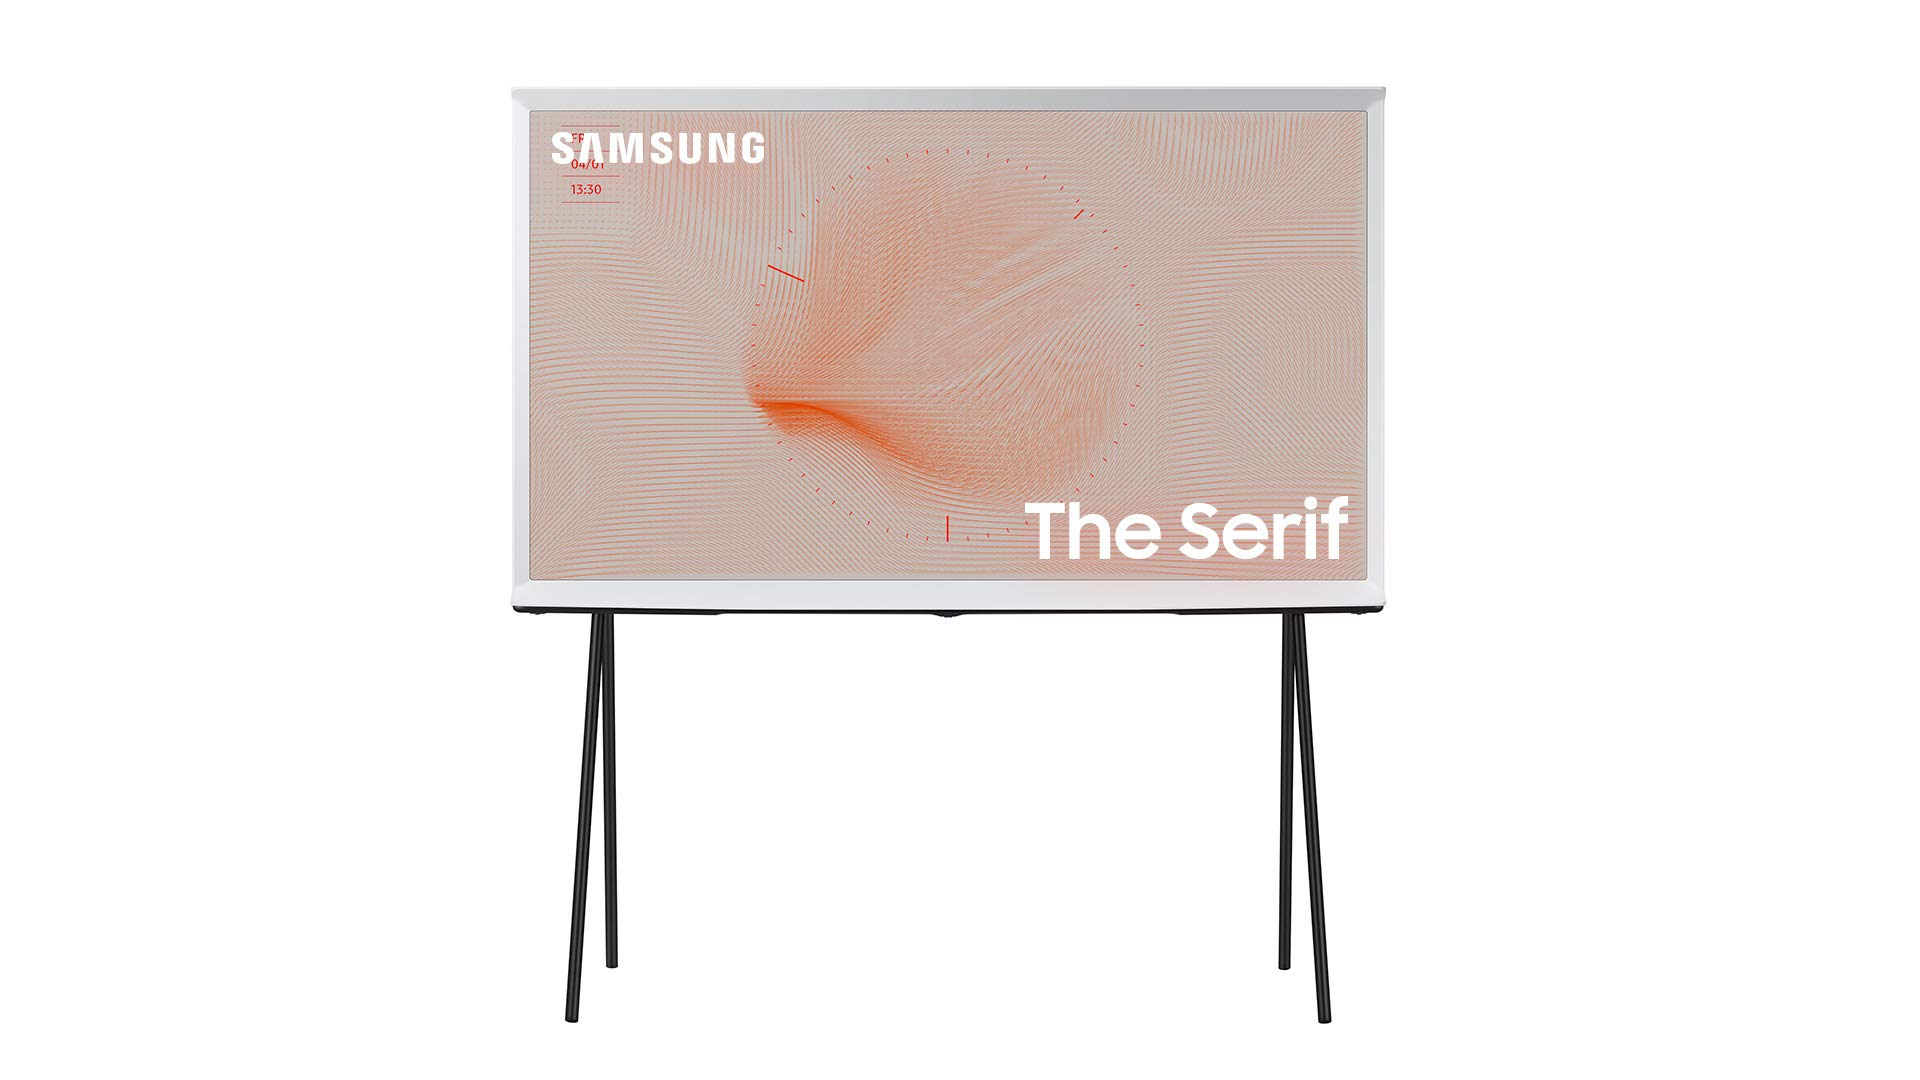 SAMSUNG 65-Inch Class QLED 4K The Serif- Smart TV with Alexa Built-in (QN65LS01TAFXZA, 2021 Model) $599.99 + FS